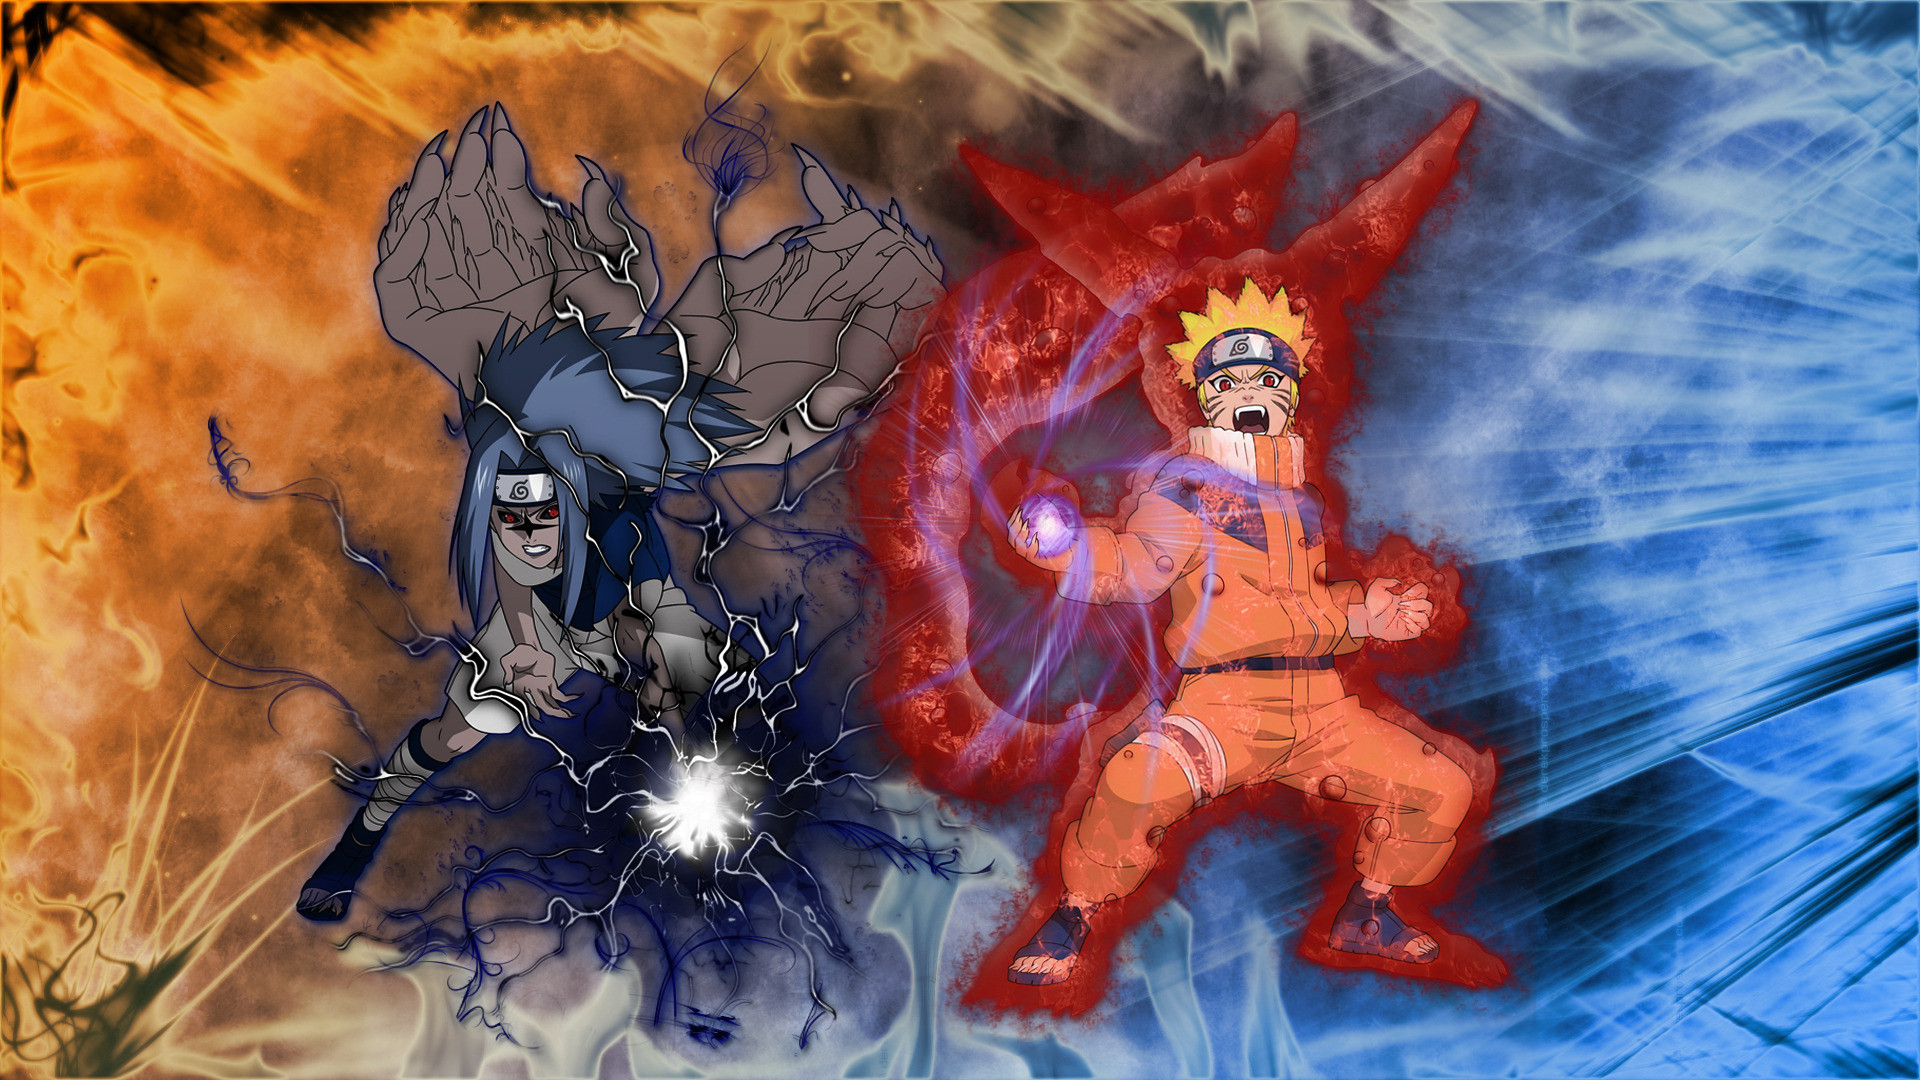 Naruto vs Sasuke Final Fight by てるひこ